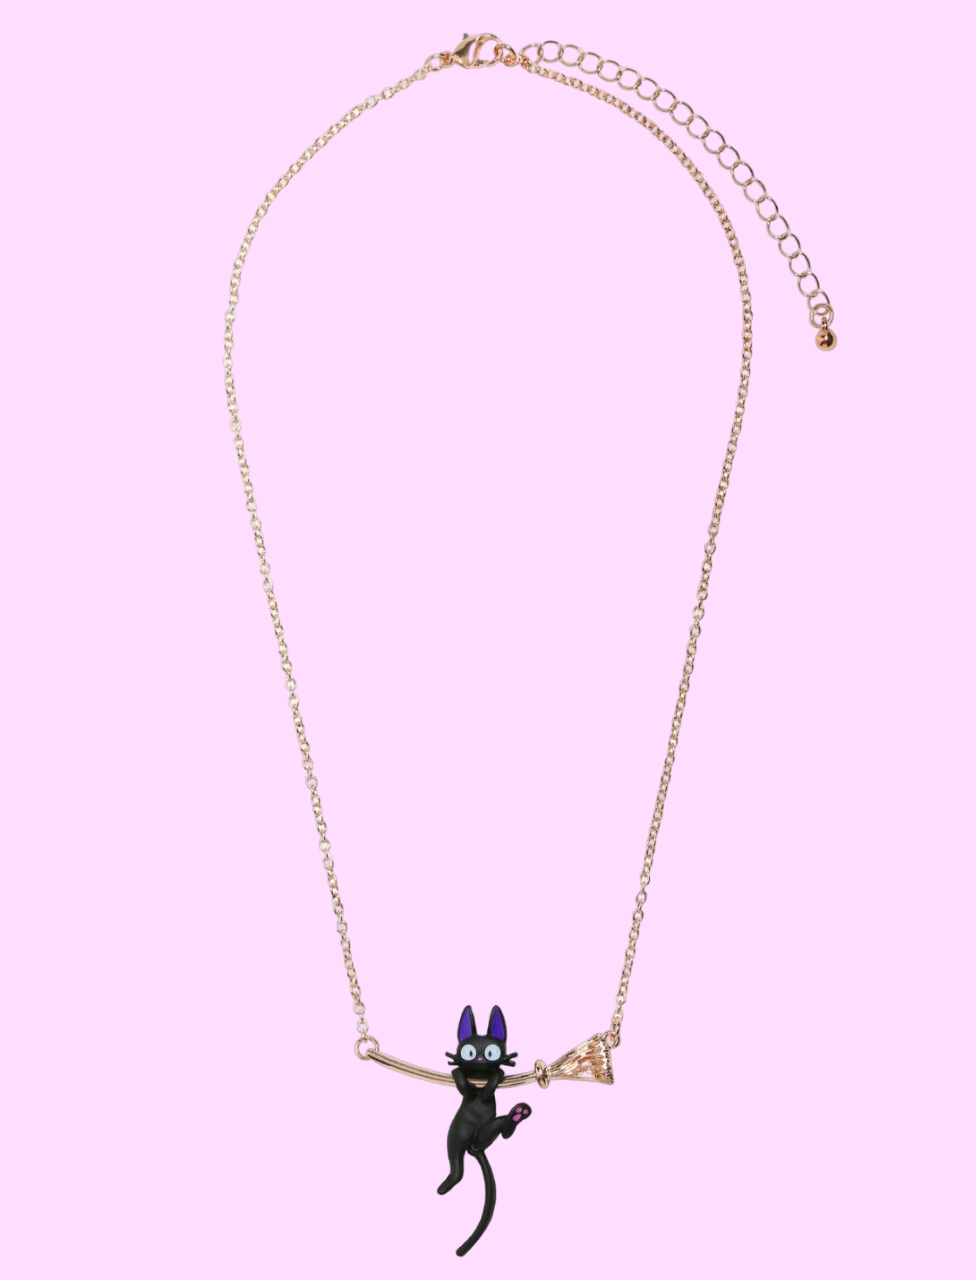 Studio Ghibli Kiki's Delivery Service, Jiji Hanging on a Broom Necklace